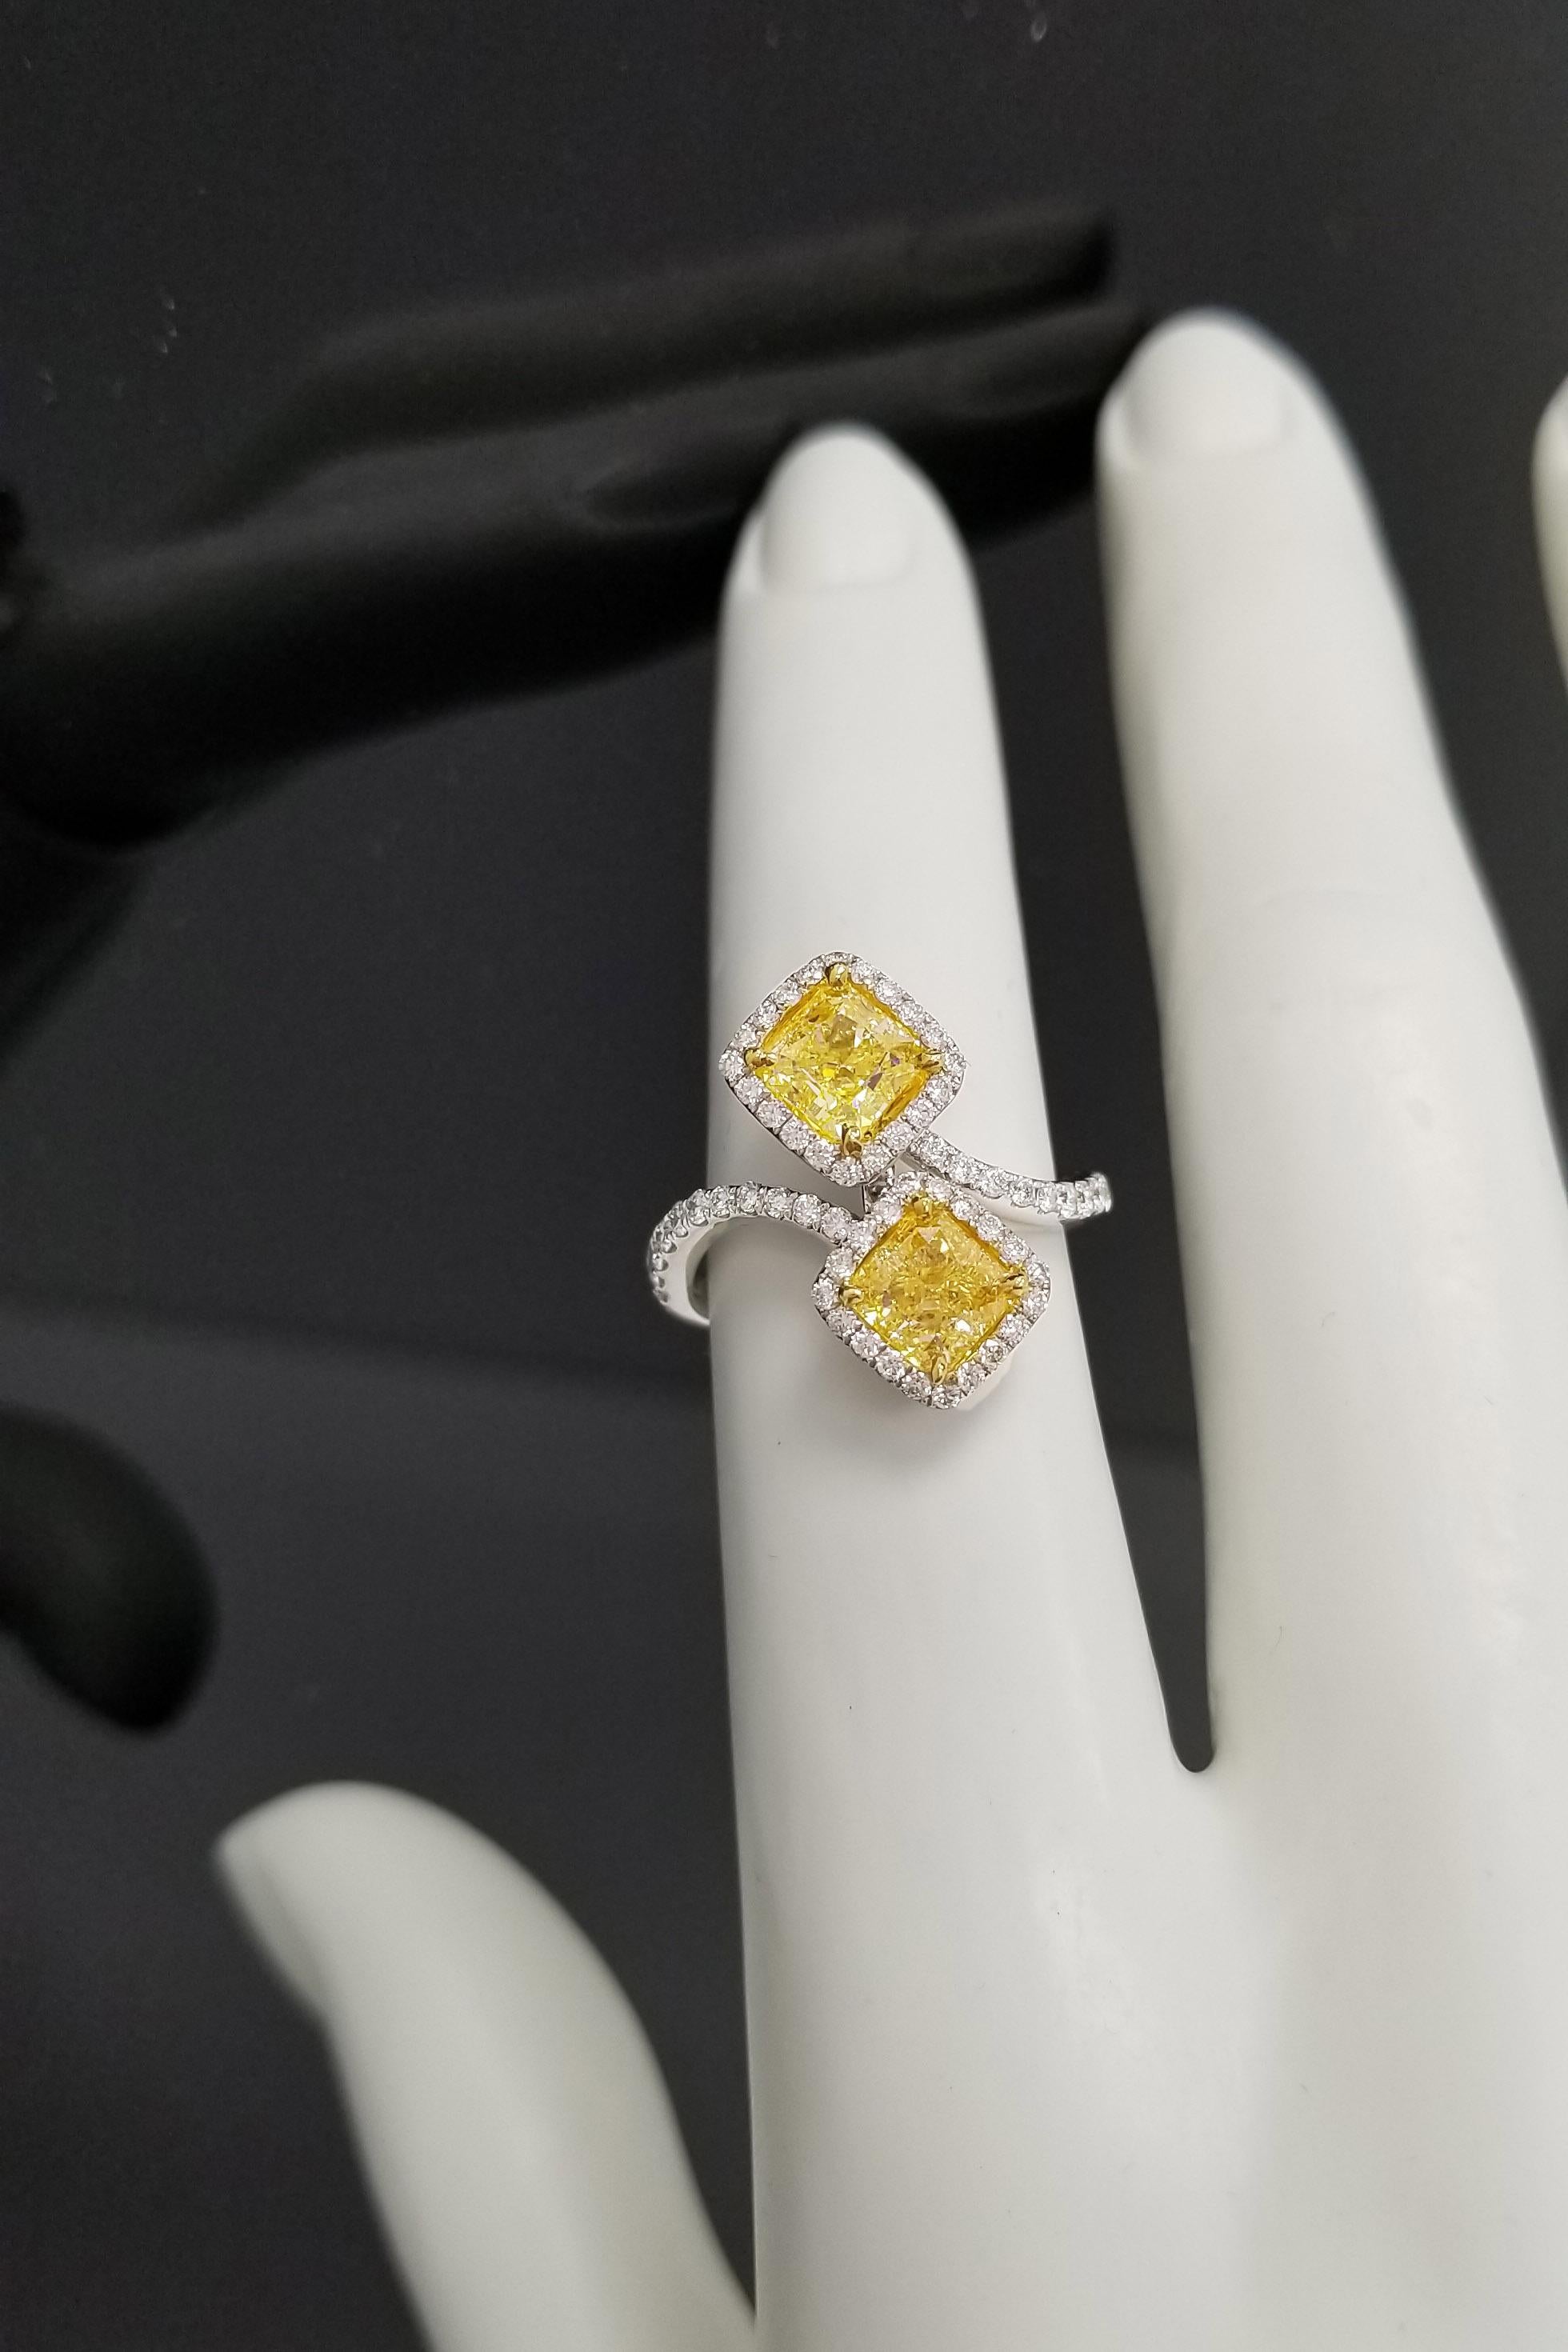 2 carat yellow diamond ring